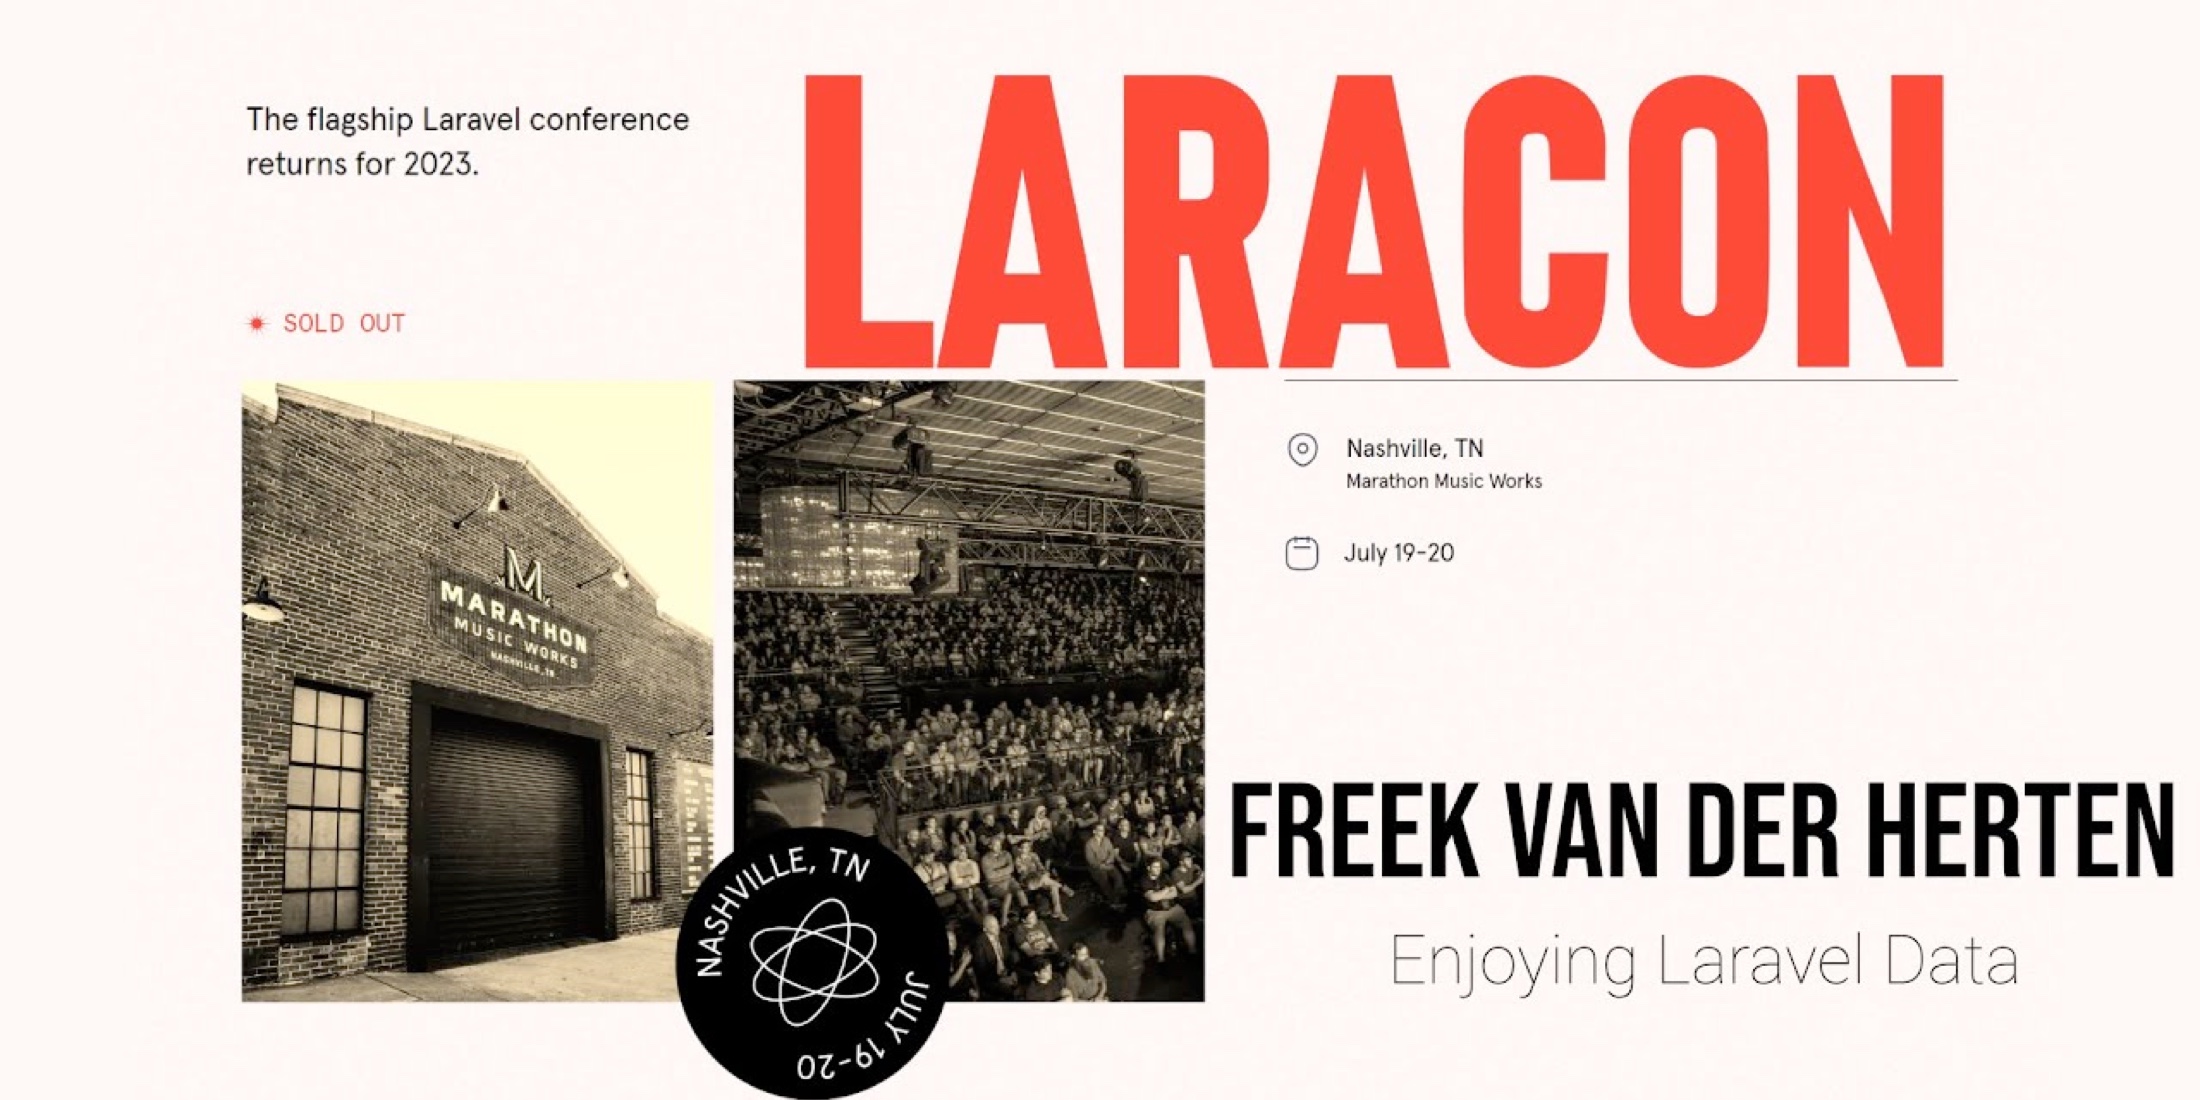 Watch Freek Van Der Herten's "Enjoying Laravel Data" talk from Laracon image